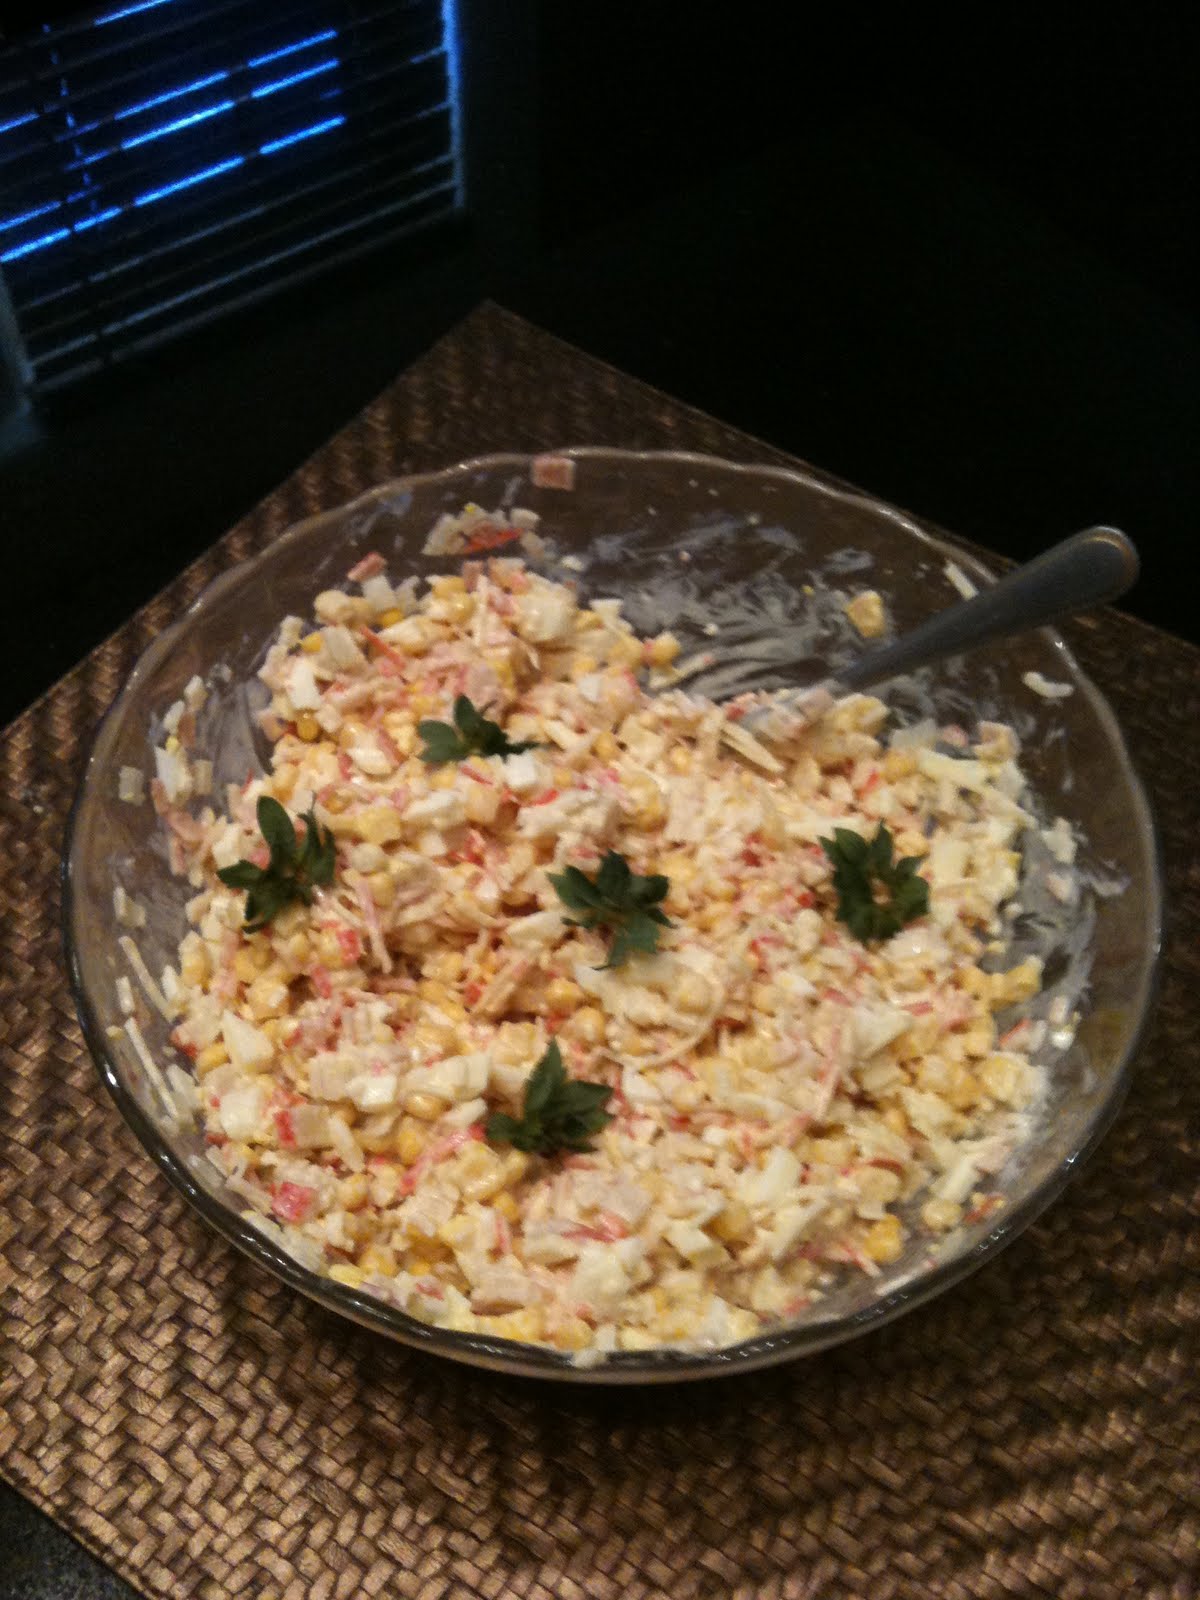 What's For Dinner?: Crabmeat Salad